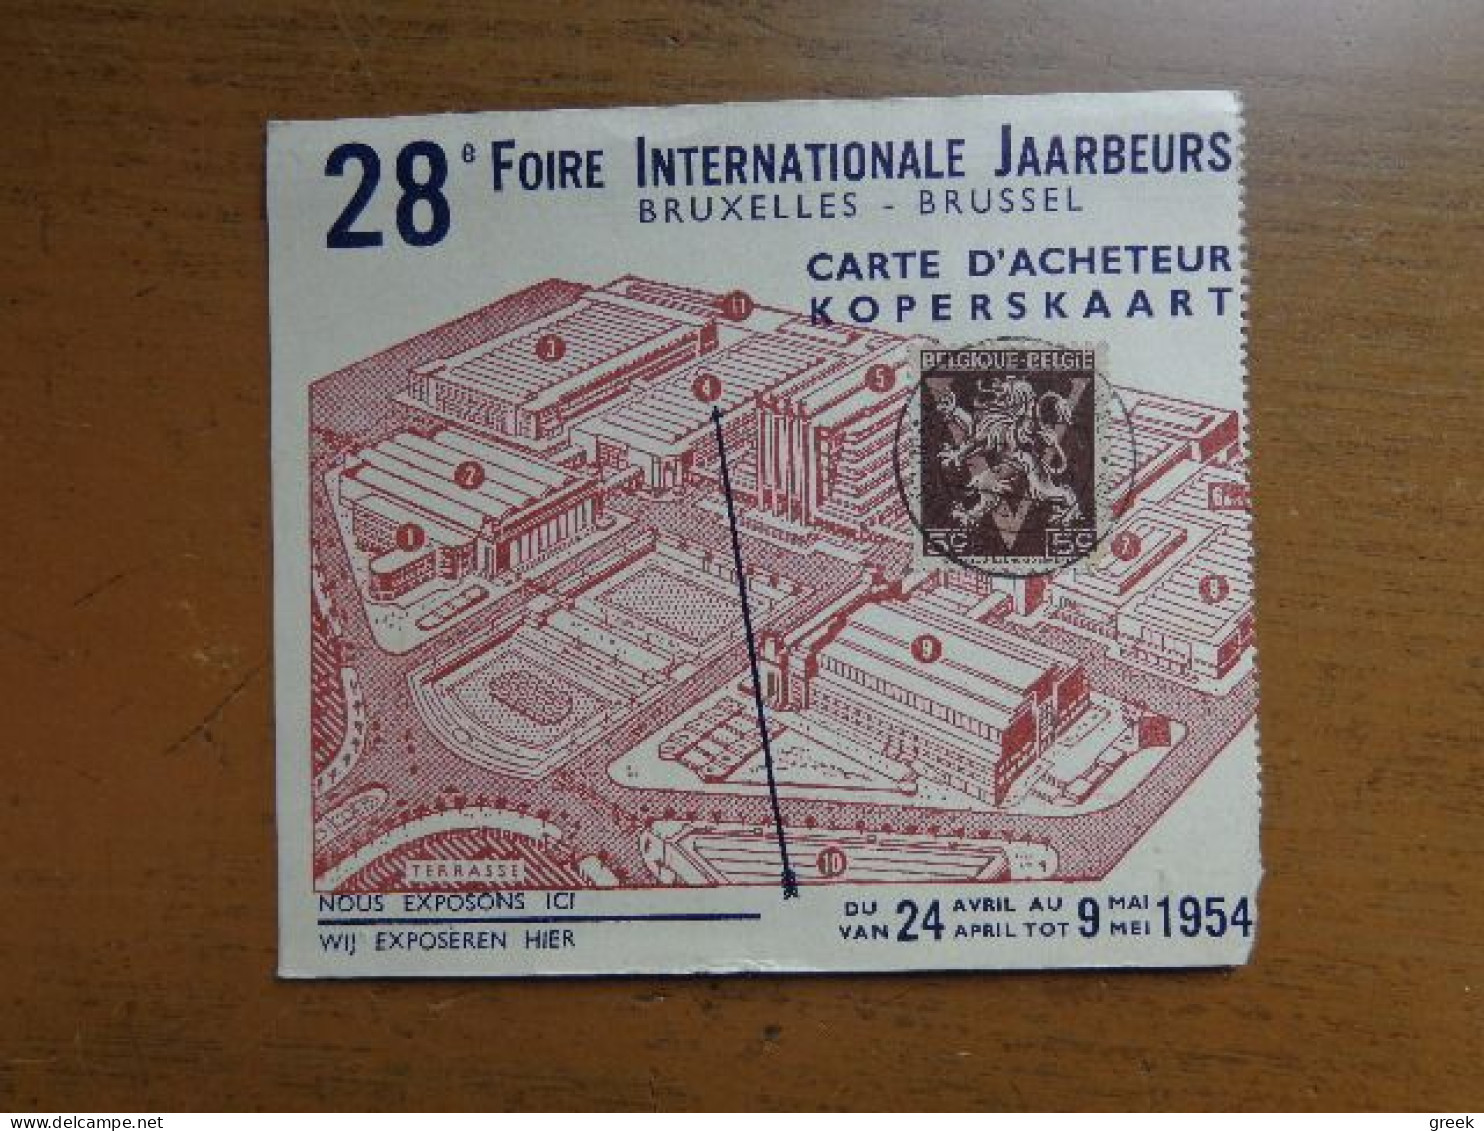 Brussel - Bruxelles: Toegangticket 28e Foire Internationale Jaarbeurs 1954 - Feiern, Ereignisse